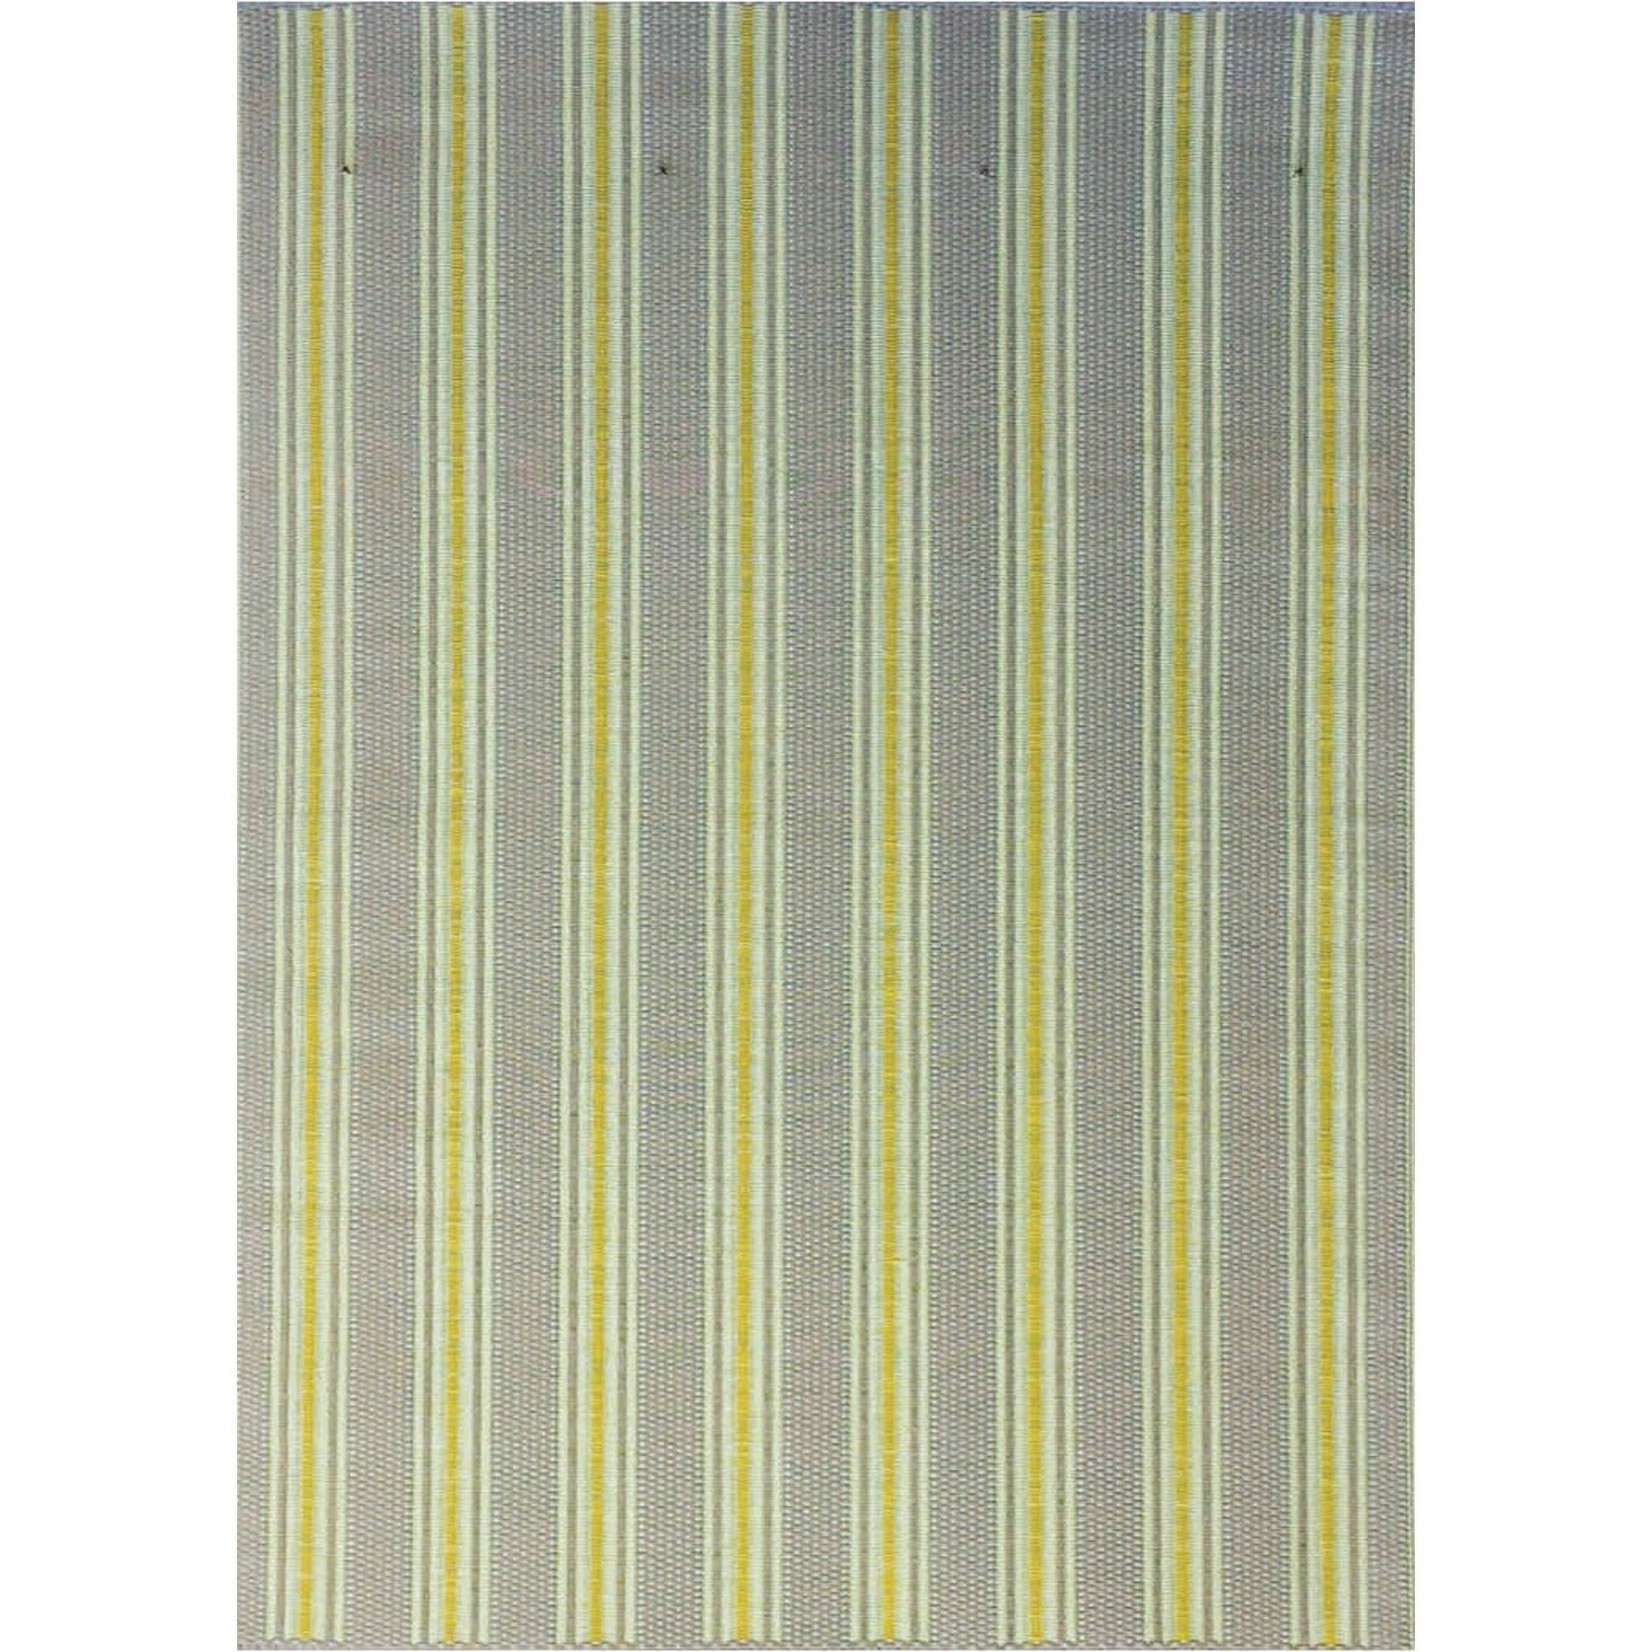 Vertical Stripe Grey Yellow